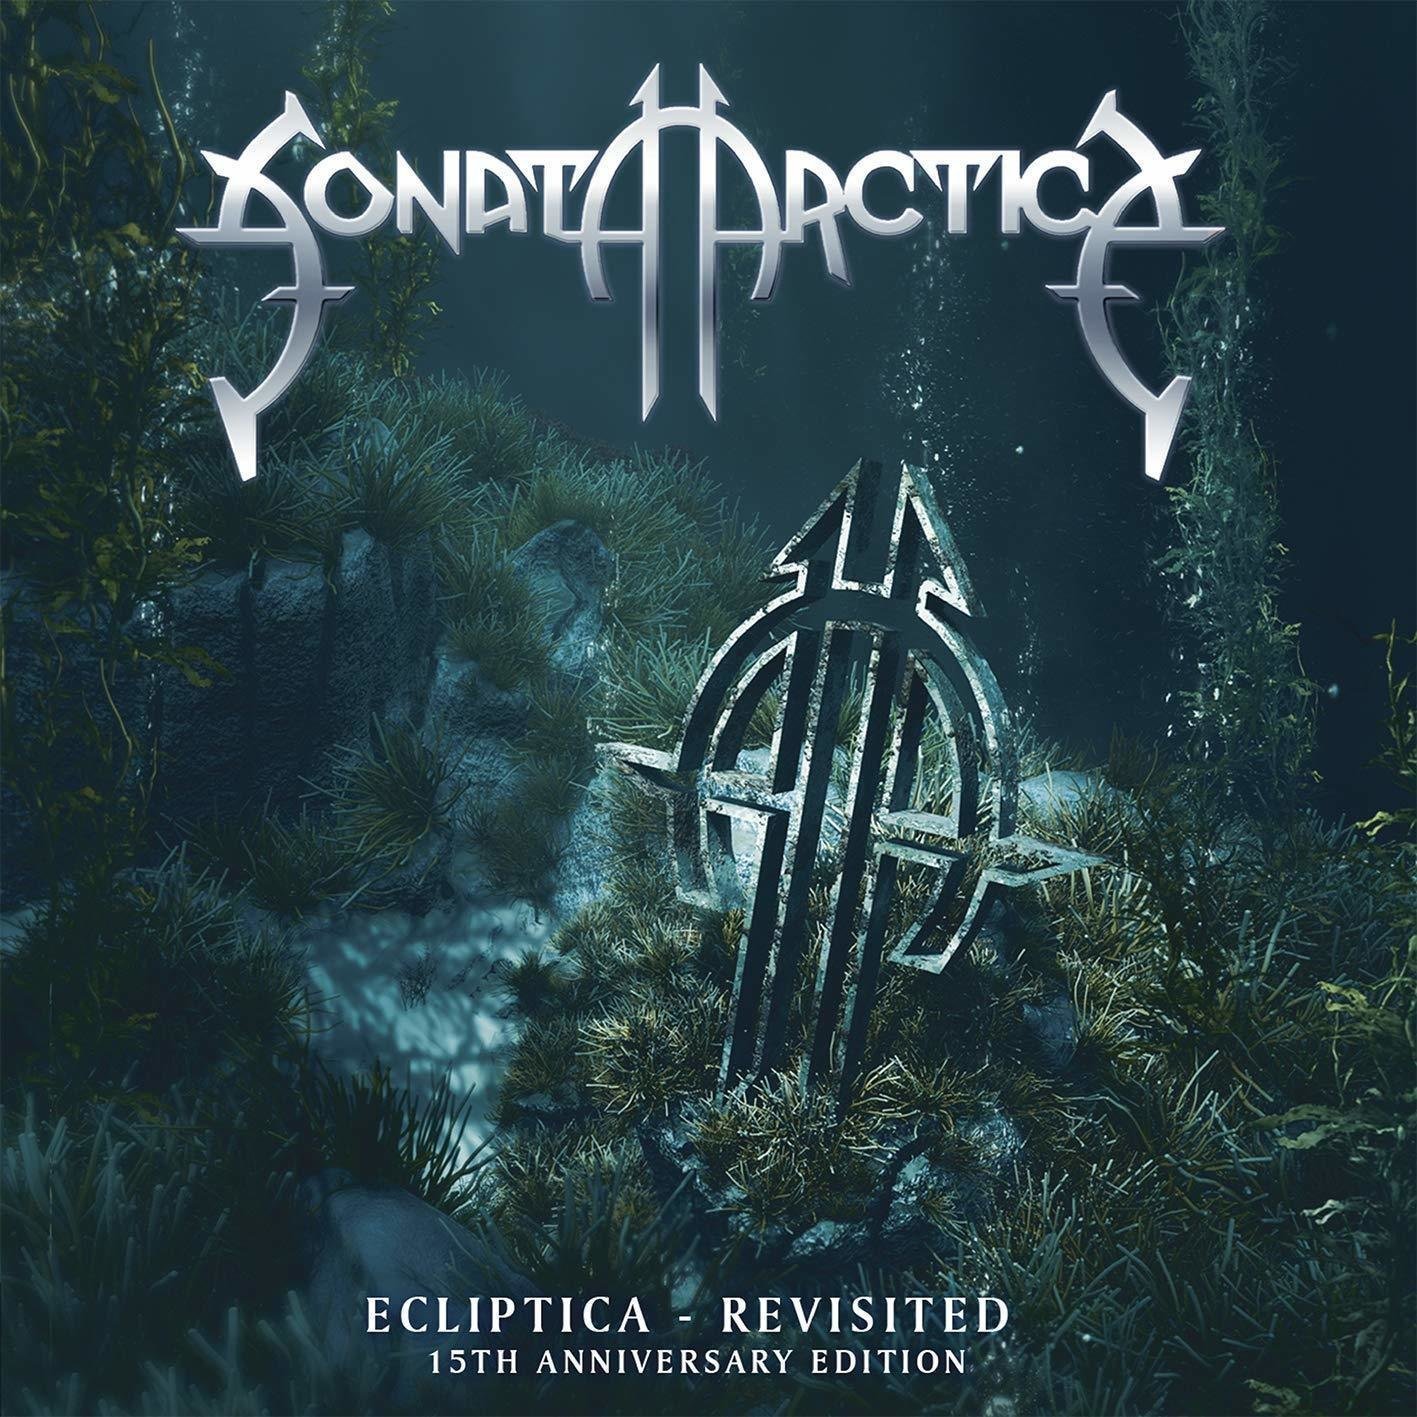 Vinyl Record Sonata Arctica - Ecliptica - Revisited: 15 Years Anniversary (Limited Edition) (2 LP)